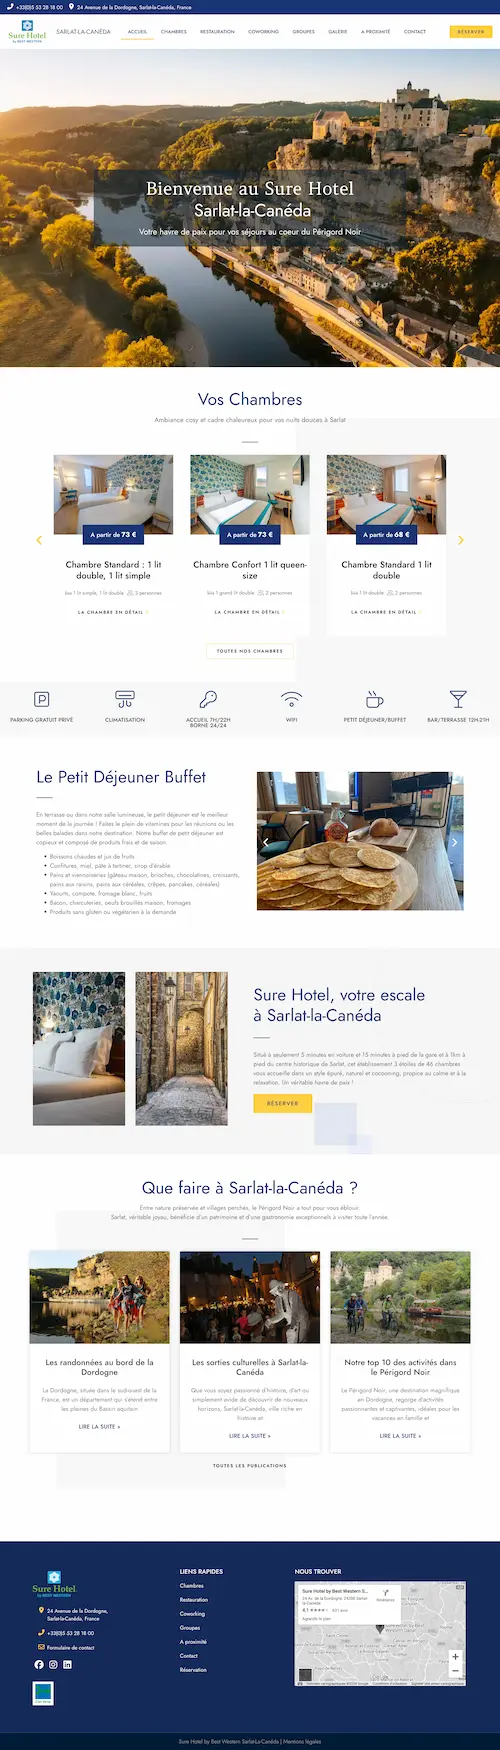 web design site hotel